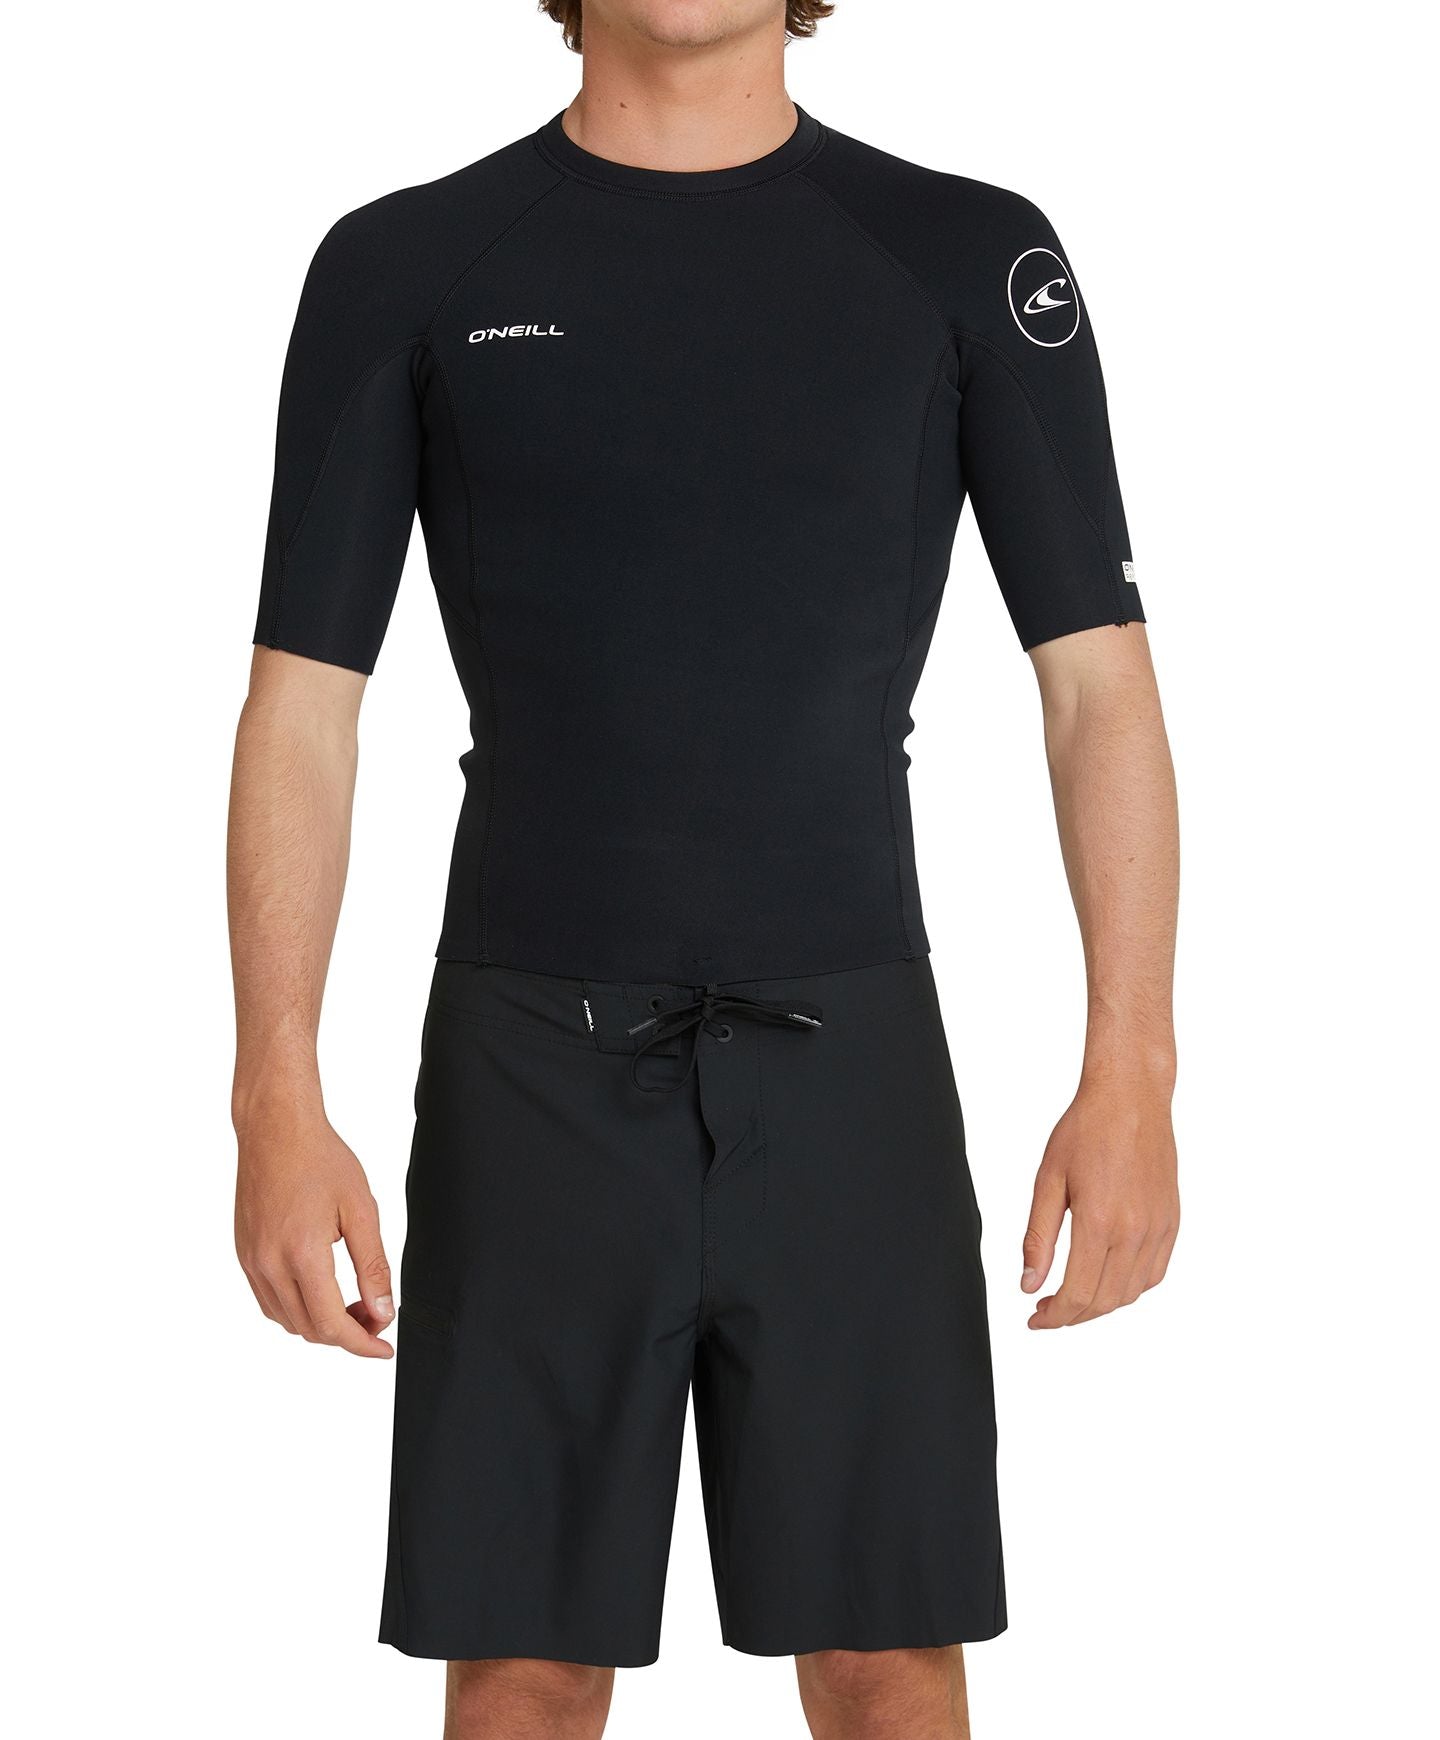 Reactor 1.5mm Short Sleeve Wetsuit Jacket - Black